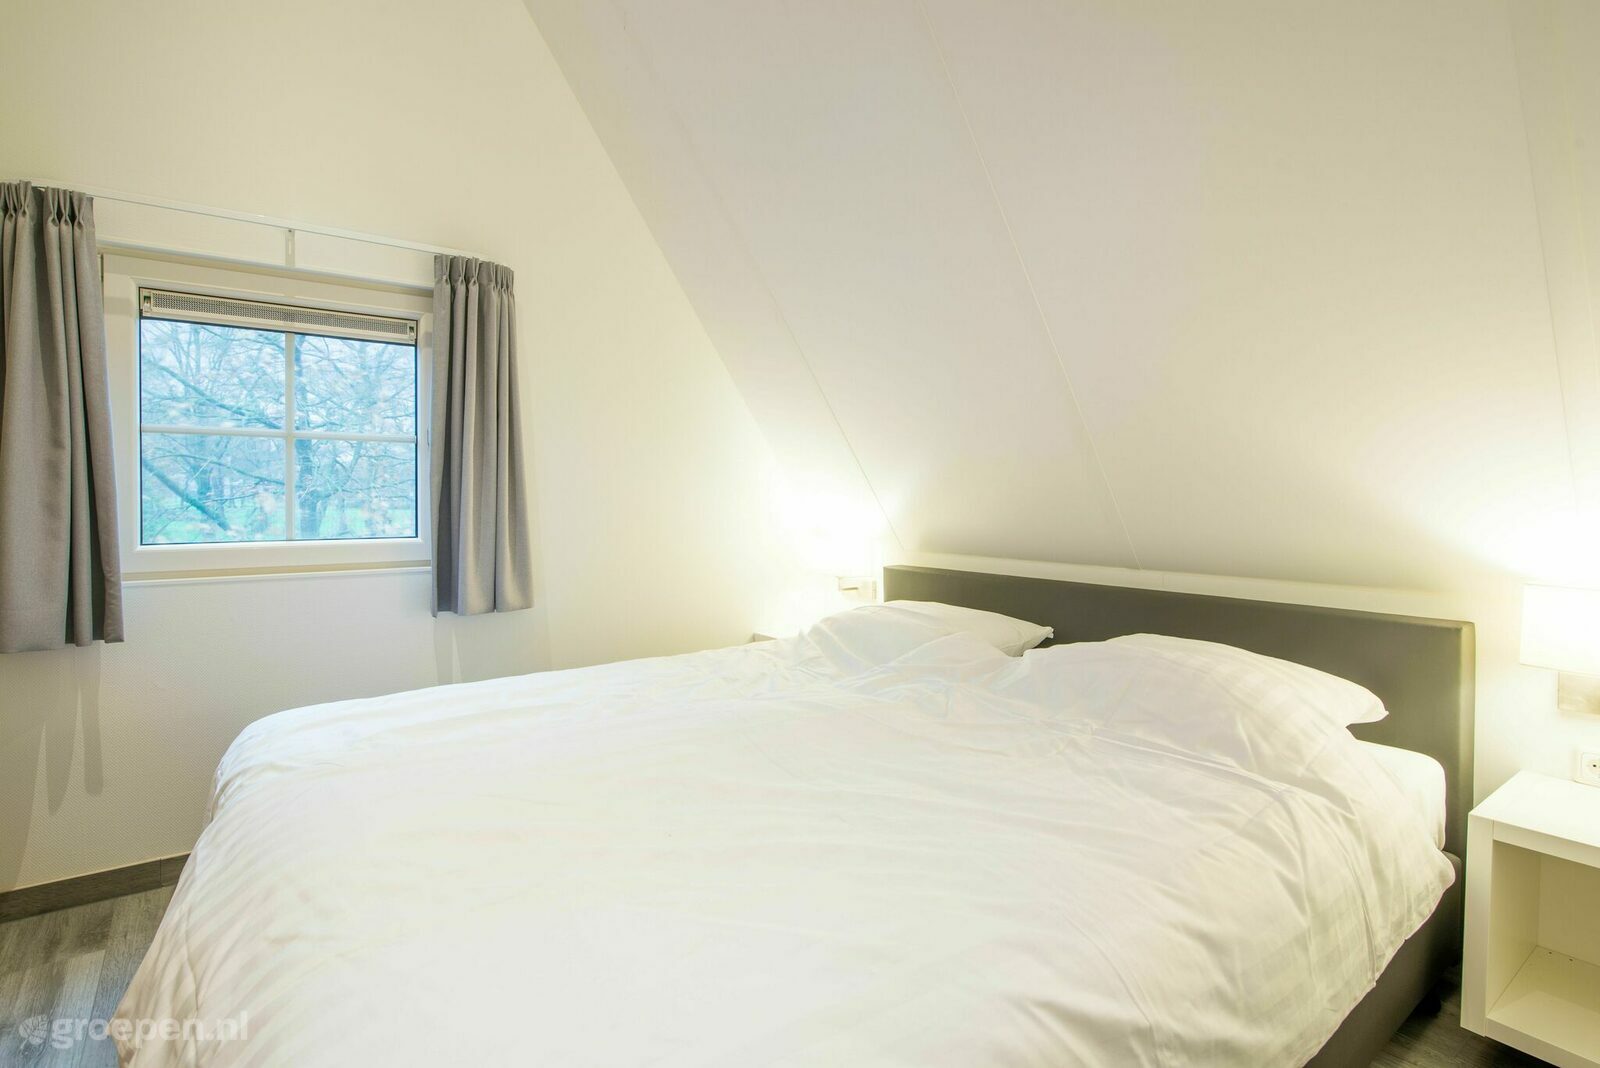 Group accommodation Hellendoorn